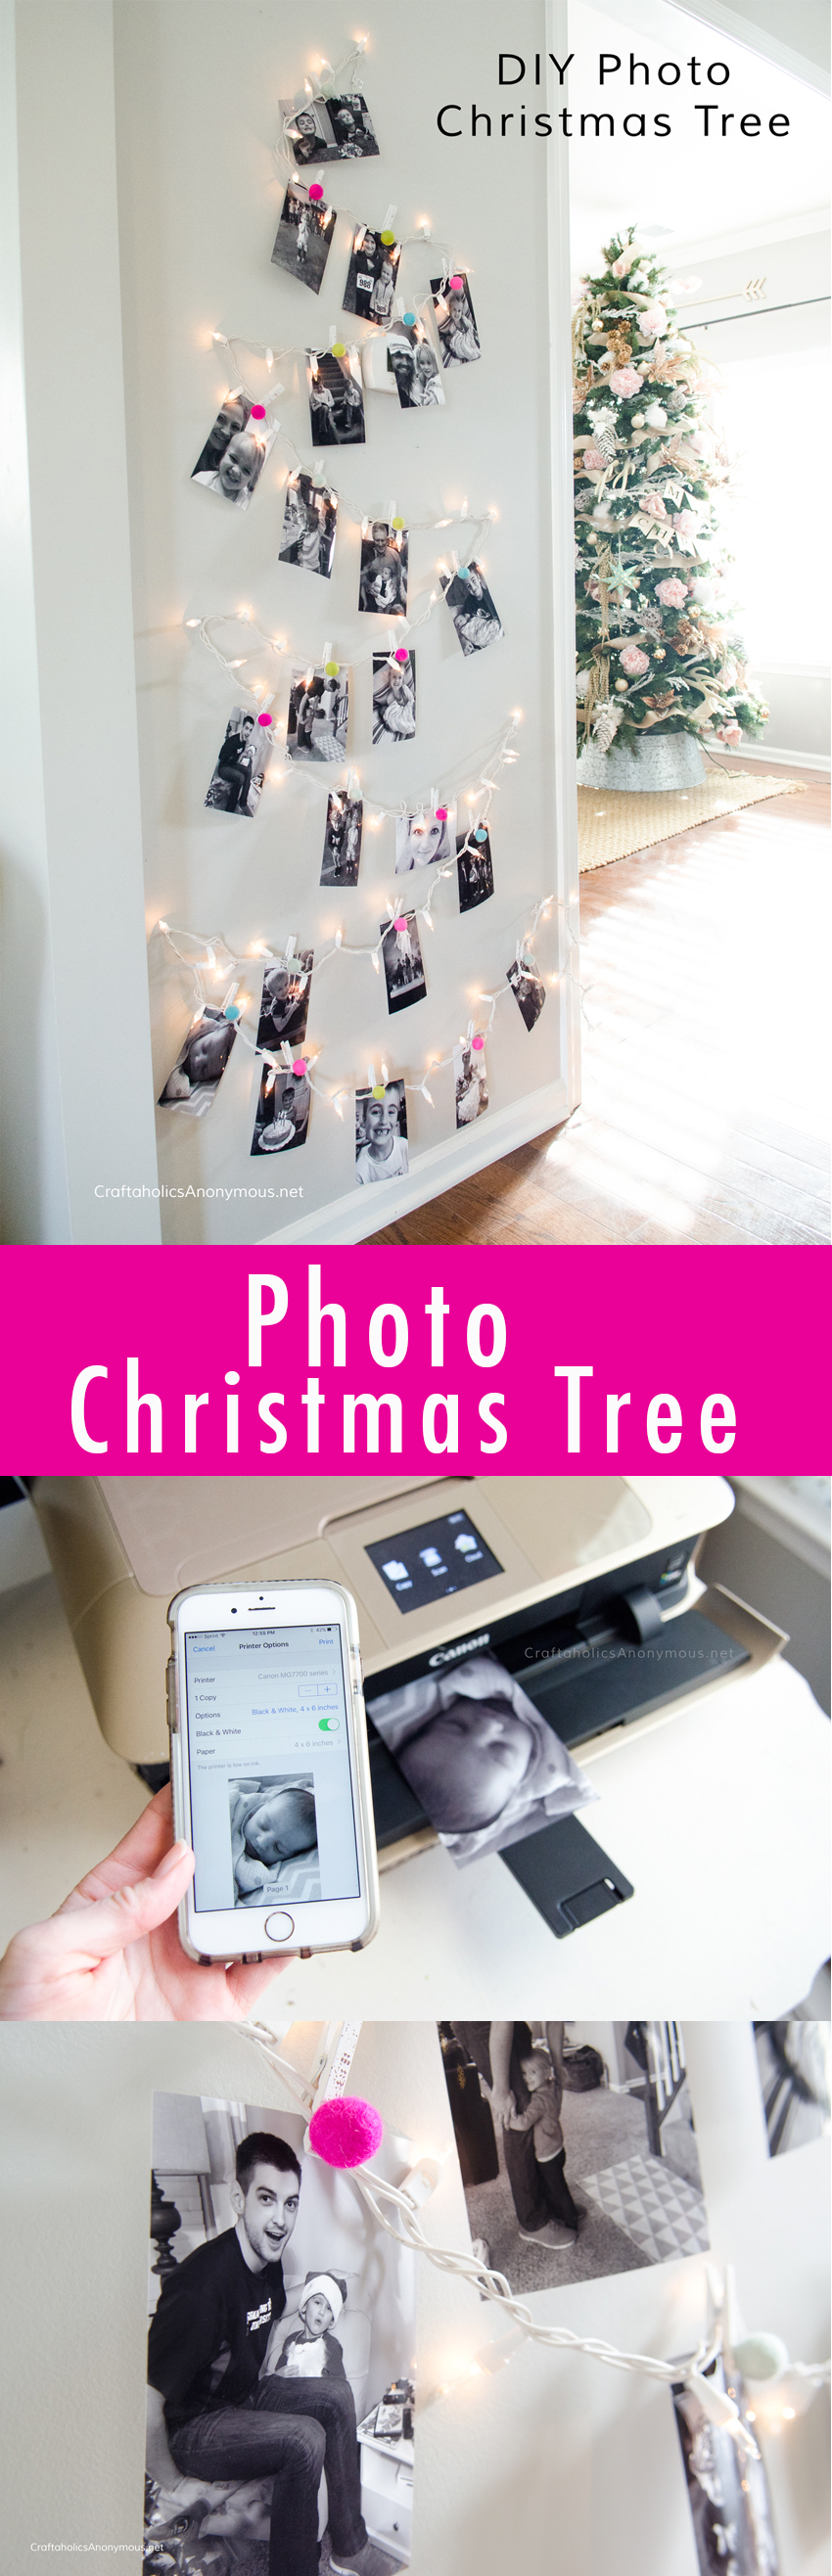 Photo Christmas Tree using twinkle lights and felt balls